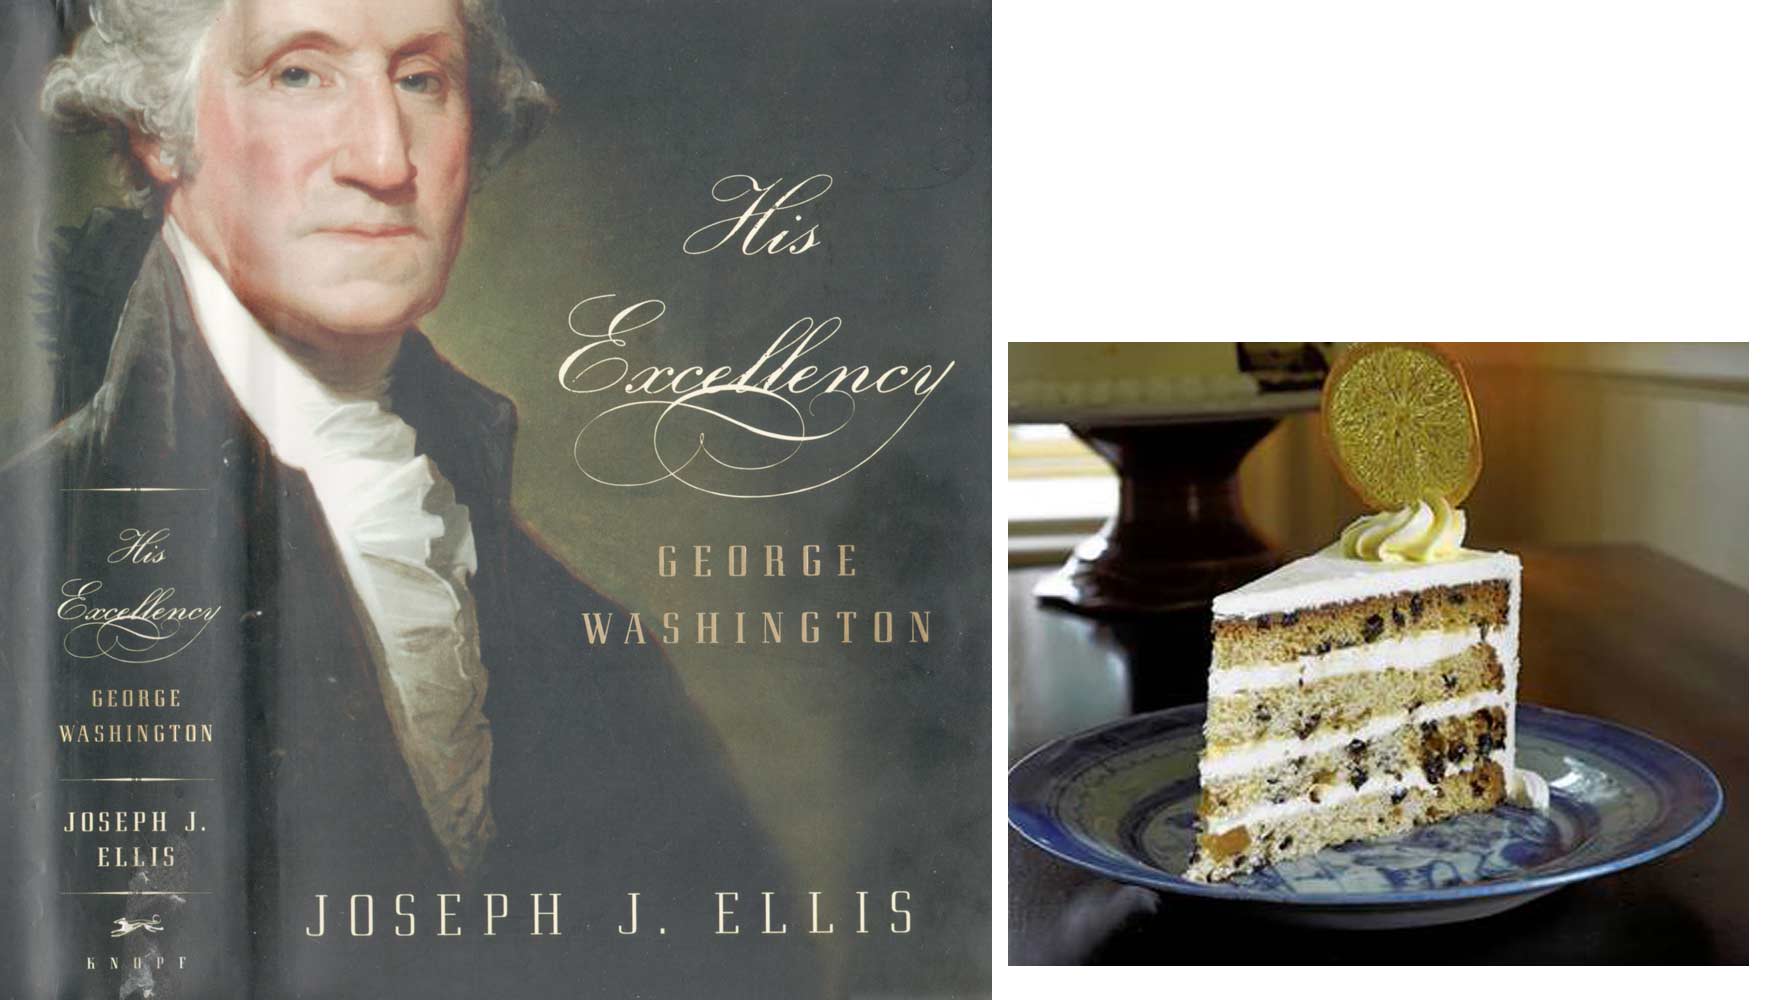 book cover Joseph J. Ellis biography of George Washington (left) Martha Washington's cake (right)